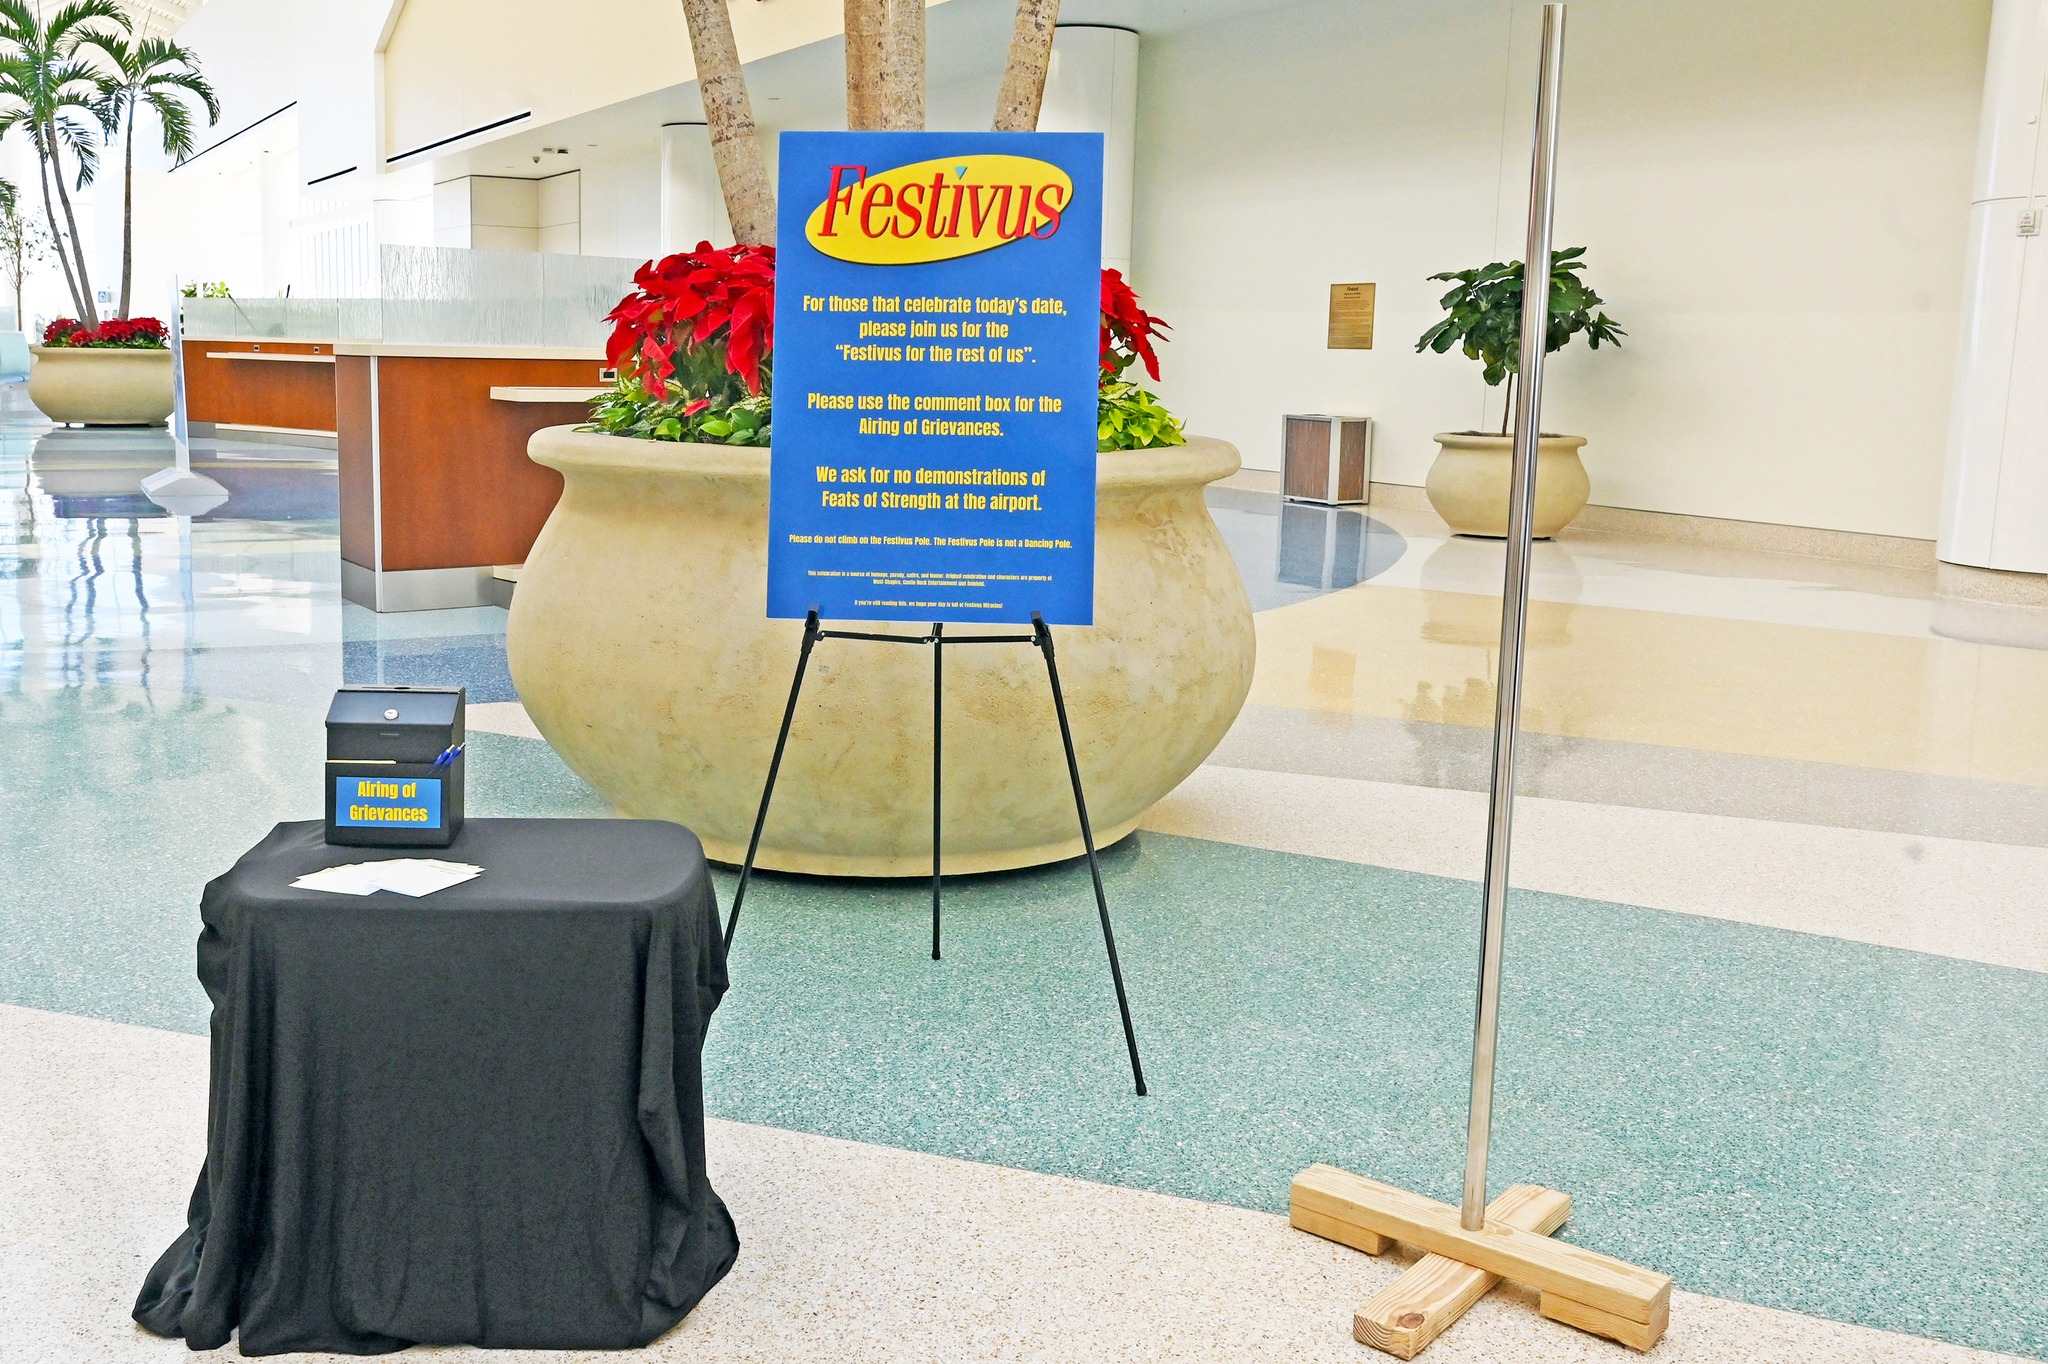 Orlando Airport Begs Travelers Not To Use Festivus Decoration As Stripper Pole (mediaite.com)